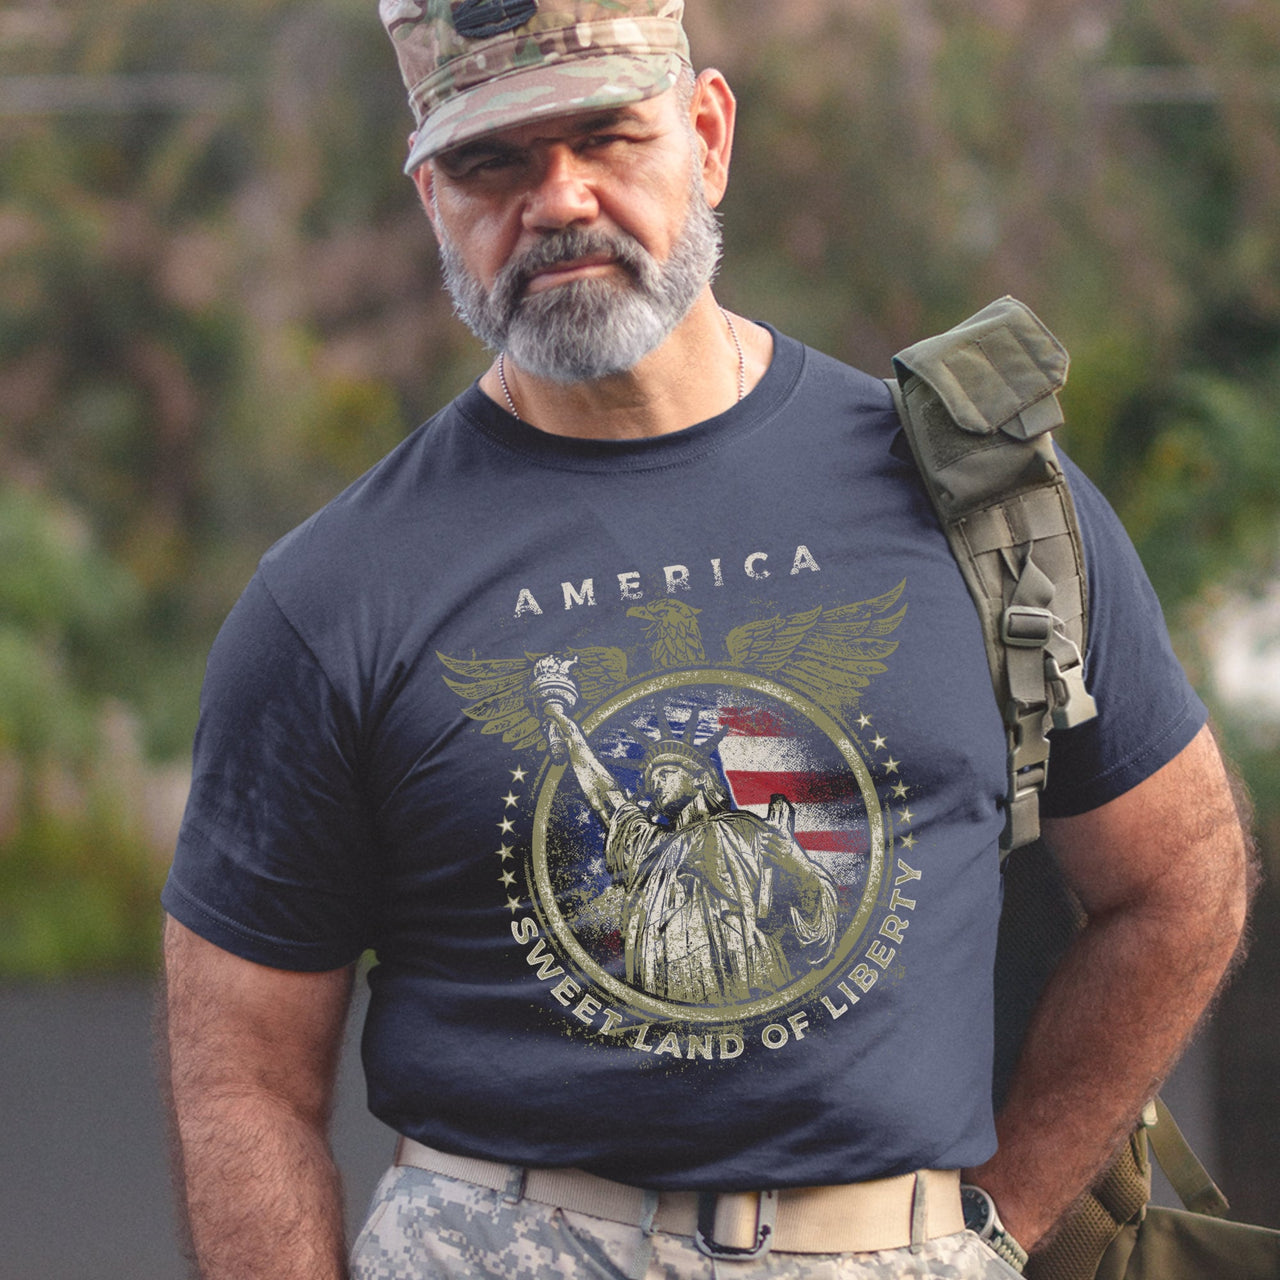 America Sweet Land of Liberty Shirt for Men